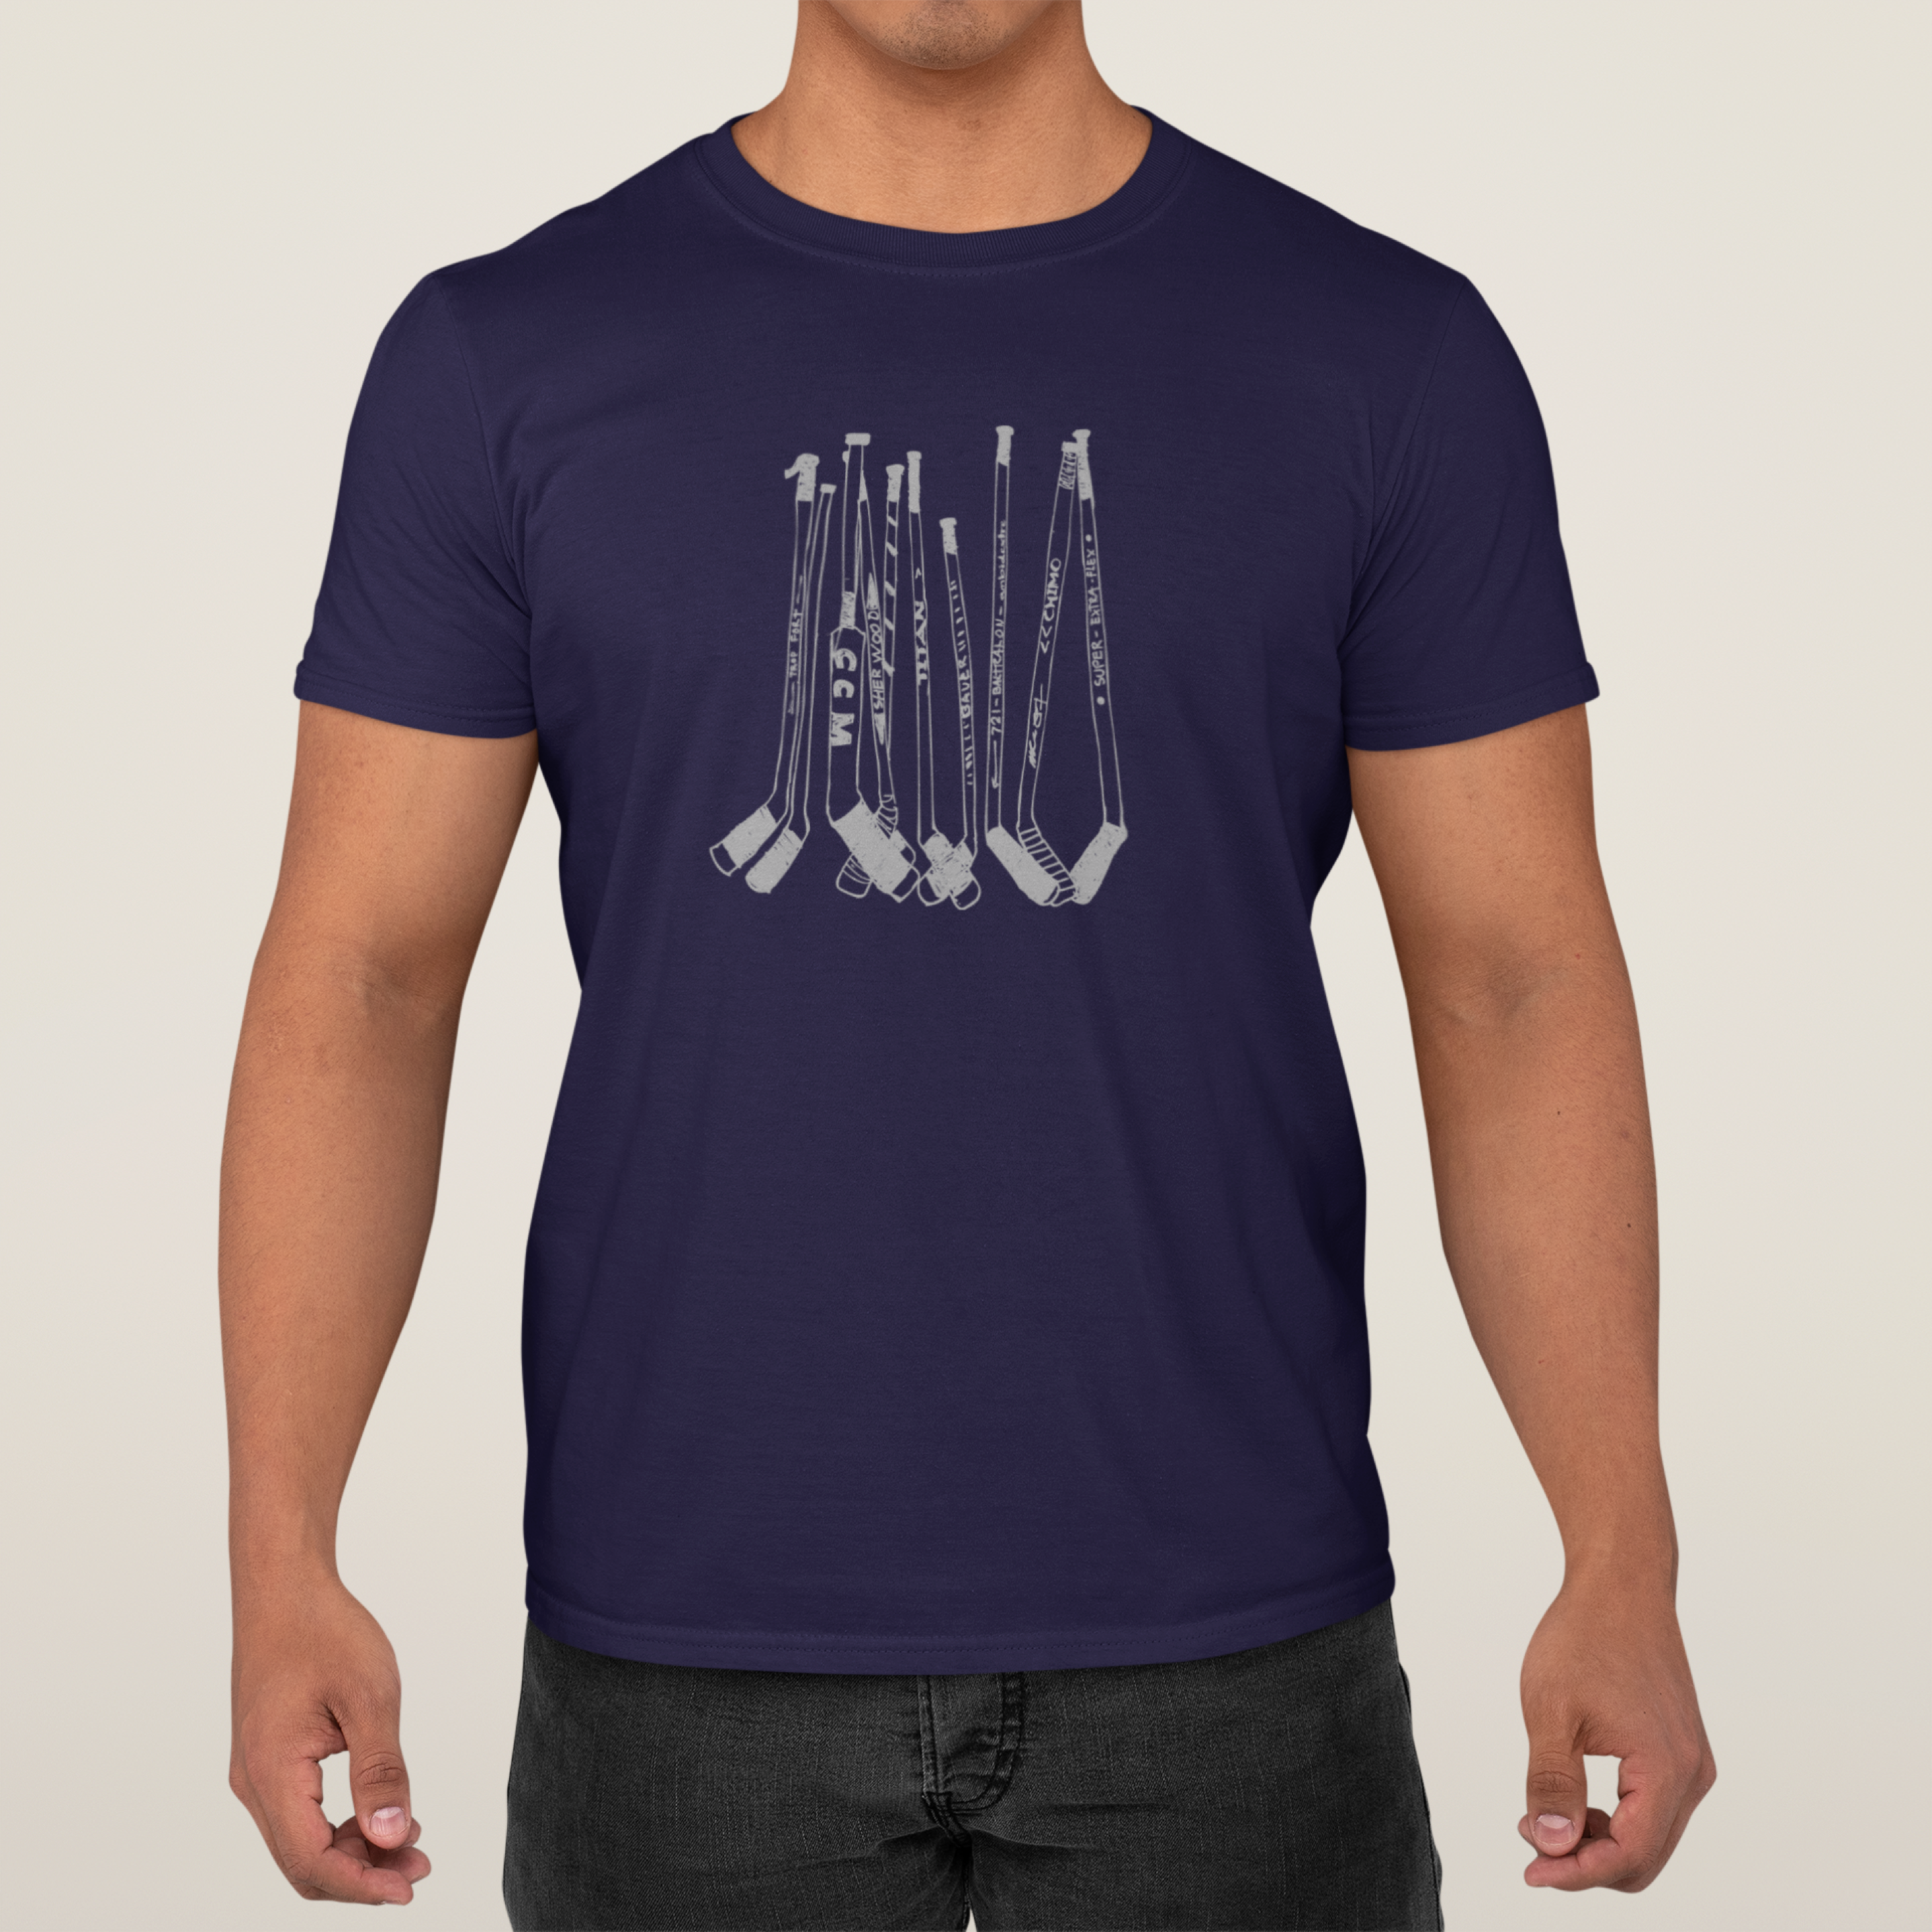 Les Hockeys-KM54-T-shirt homme/unisexe